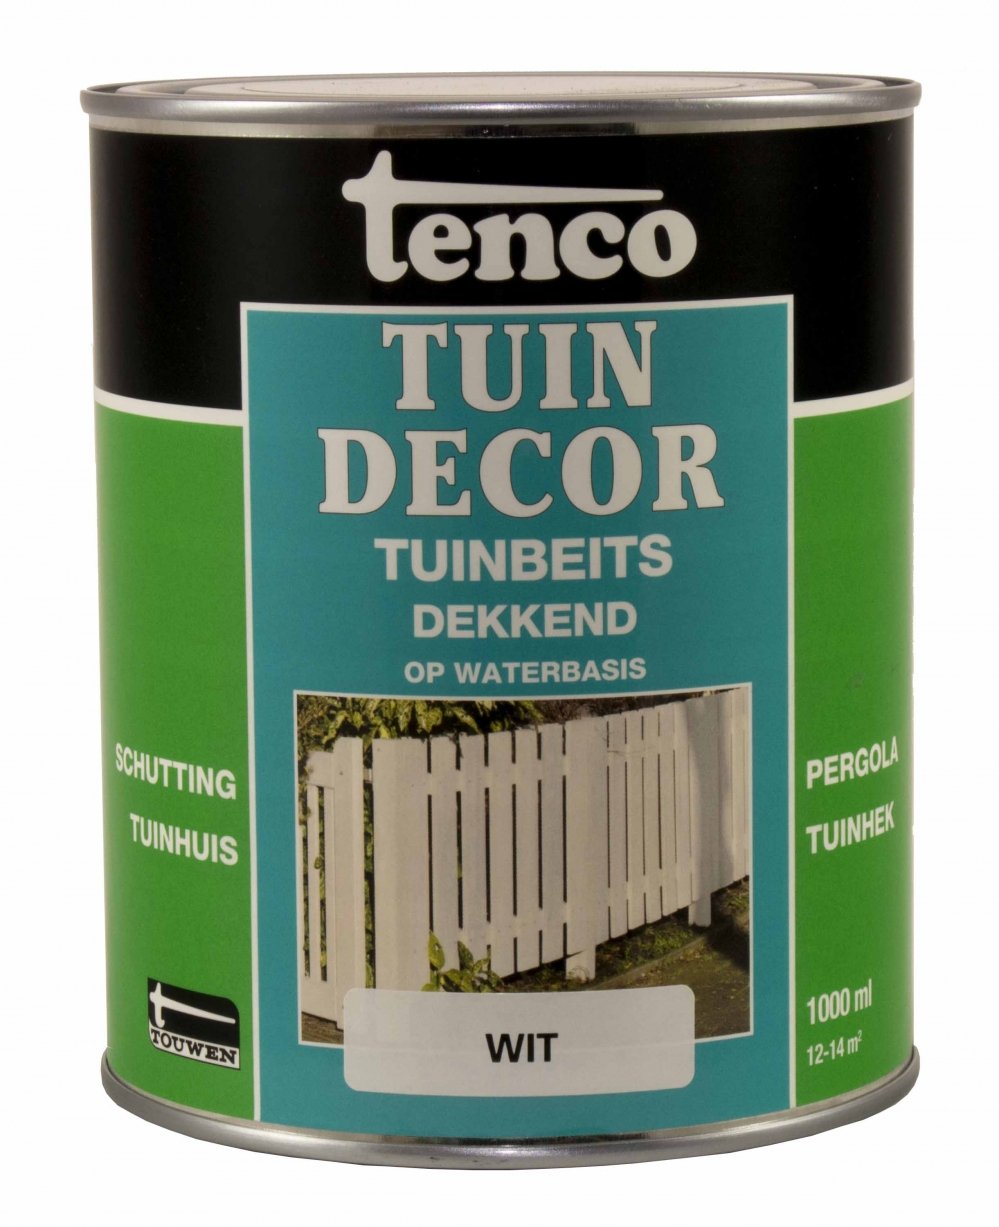 Tenco-tuindeocr-dekkend-1ltr-verfcompleet.nl